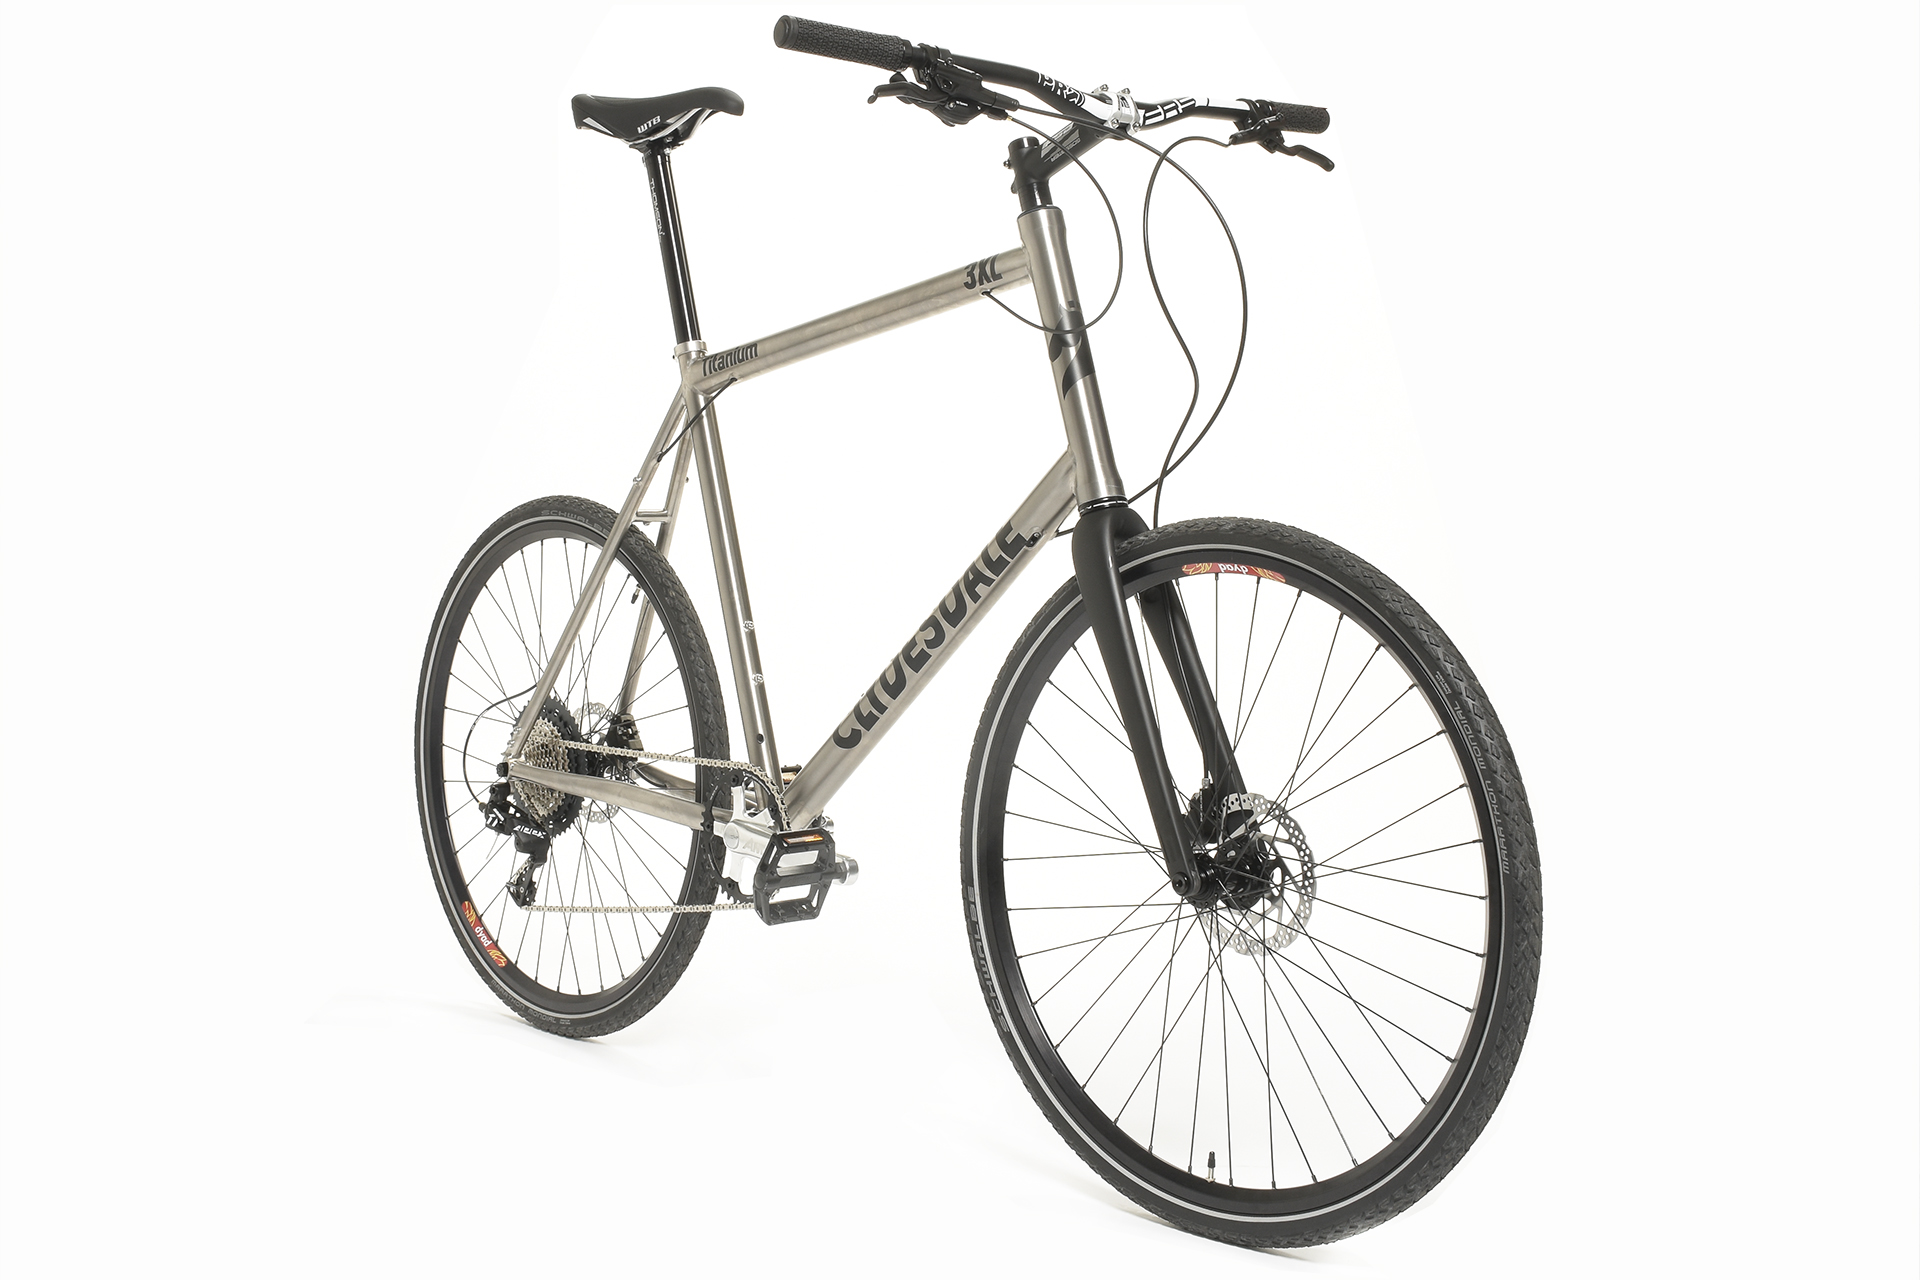 big man bicycle - Clydesdale Rein City bike